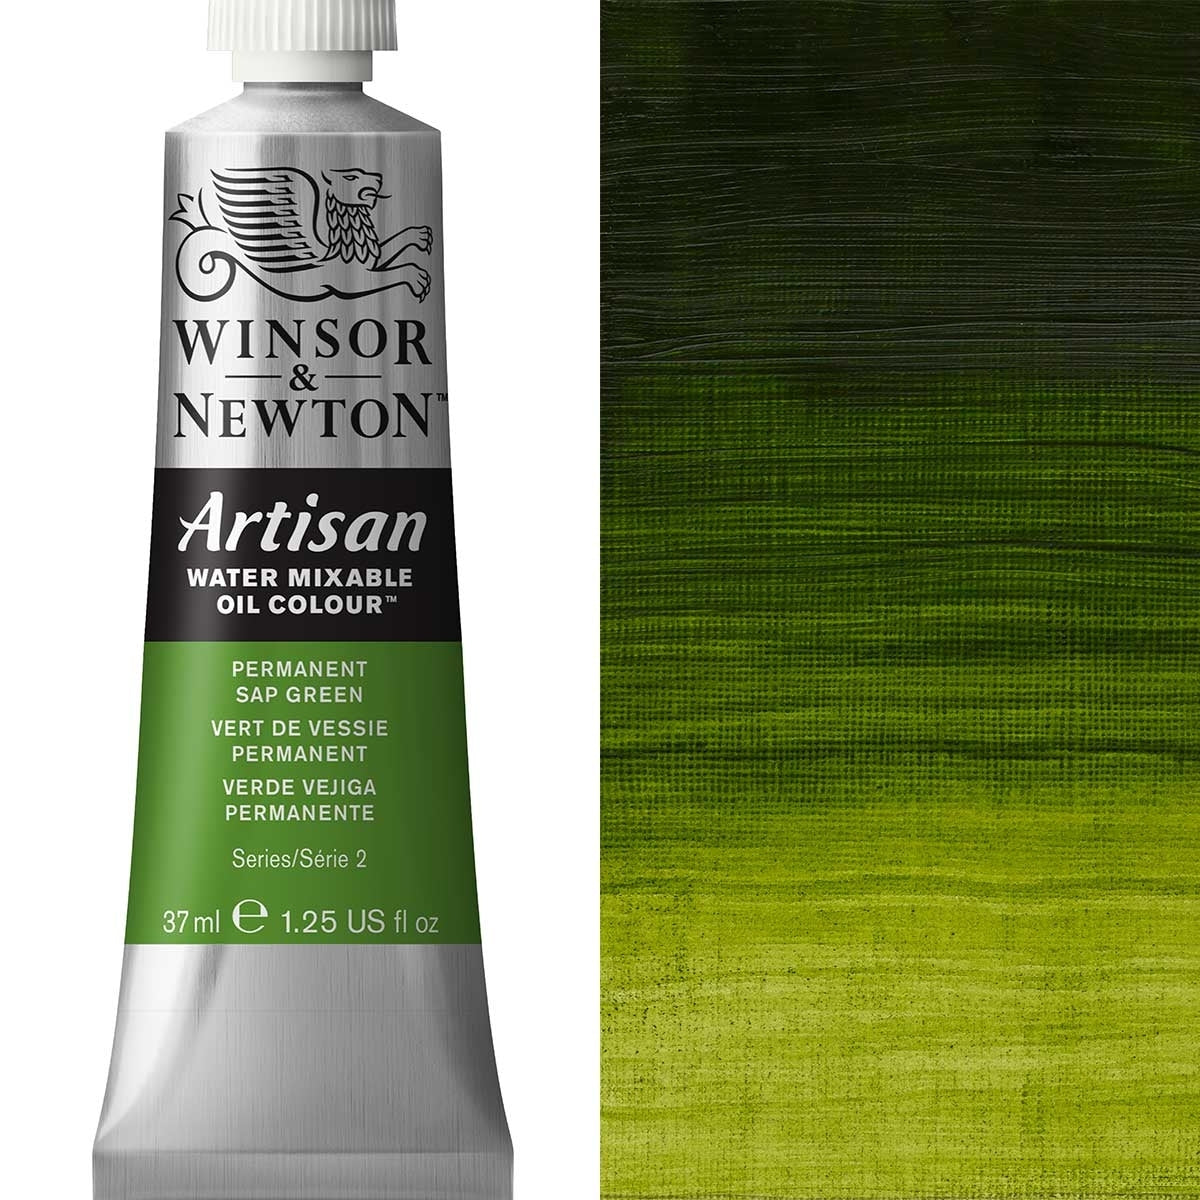 Winsor and Newton - Artisan Oil Colour Watermixable - 37ml - Permanent Sap Green